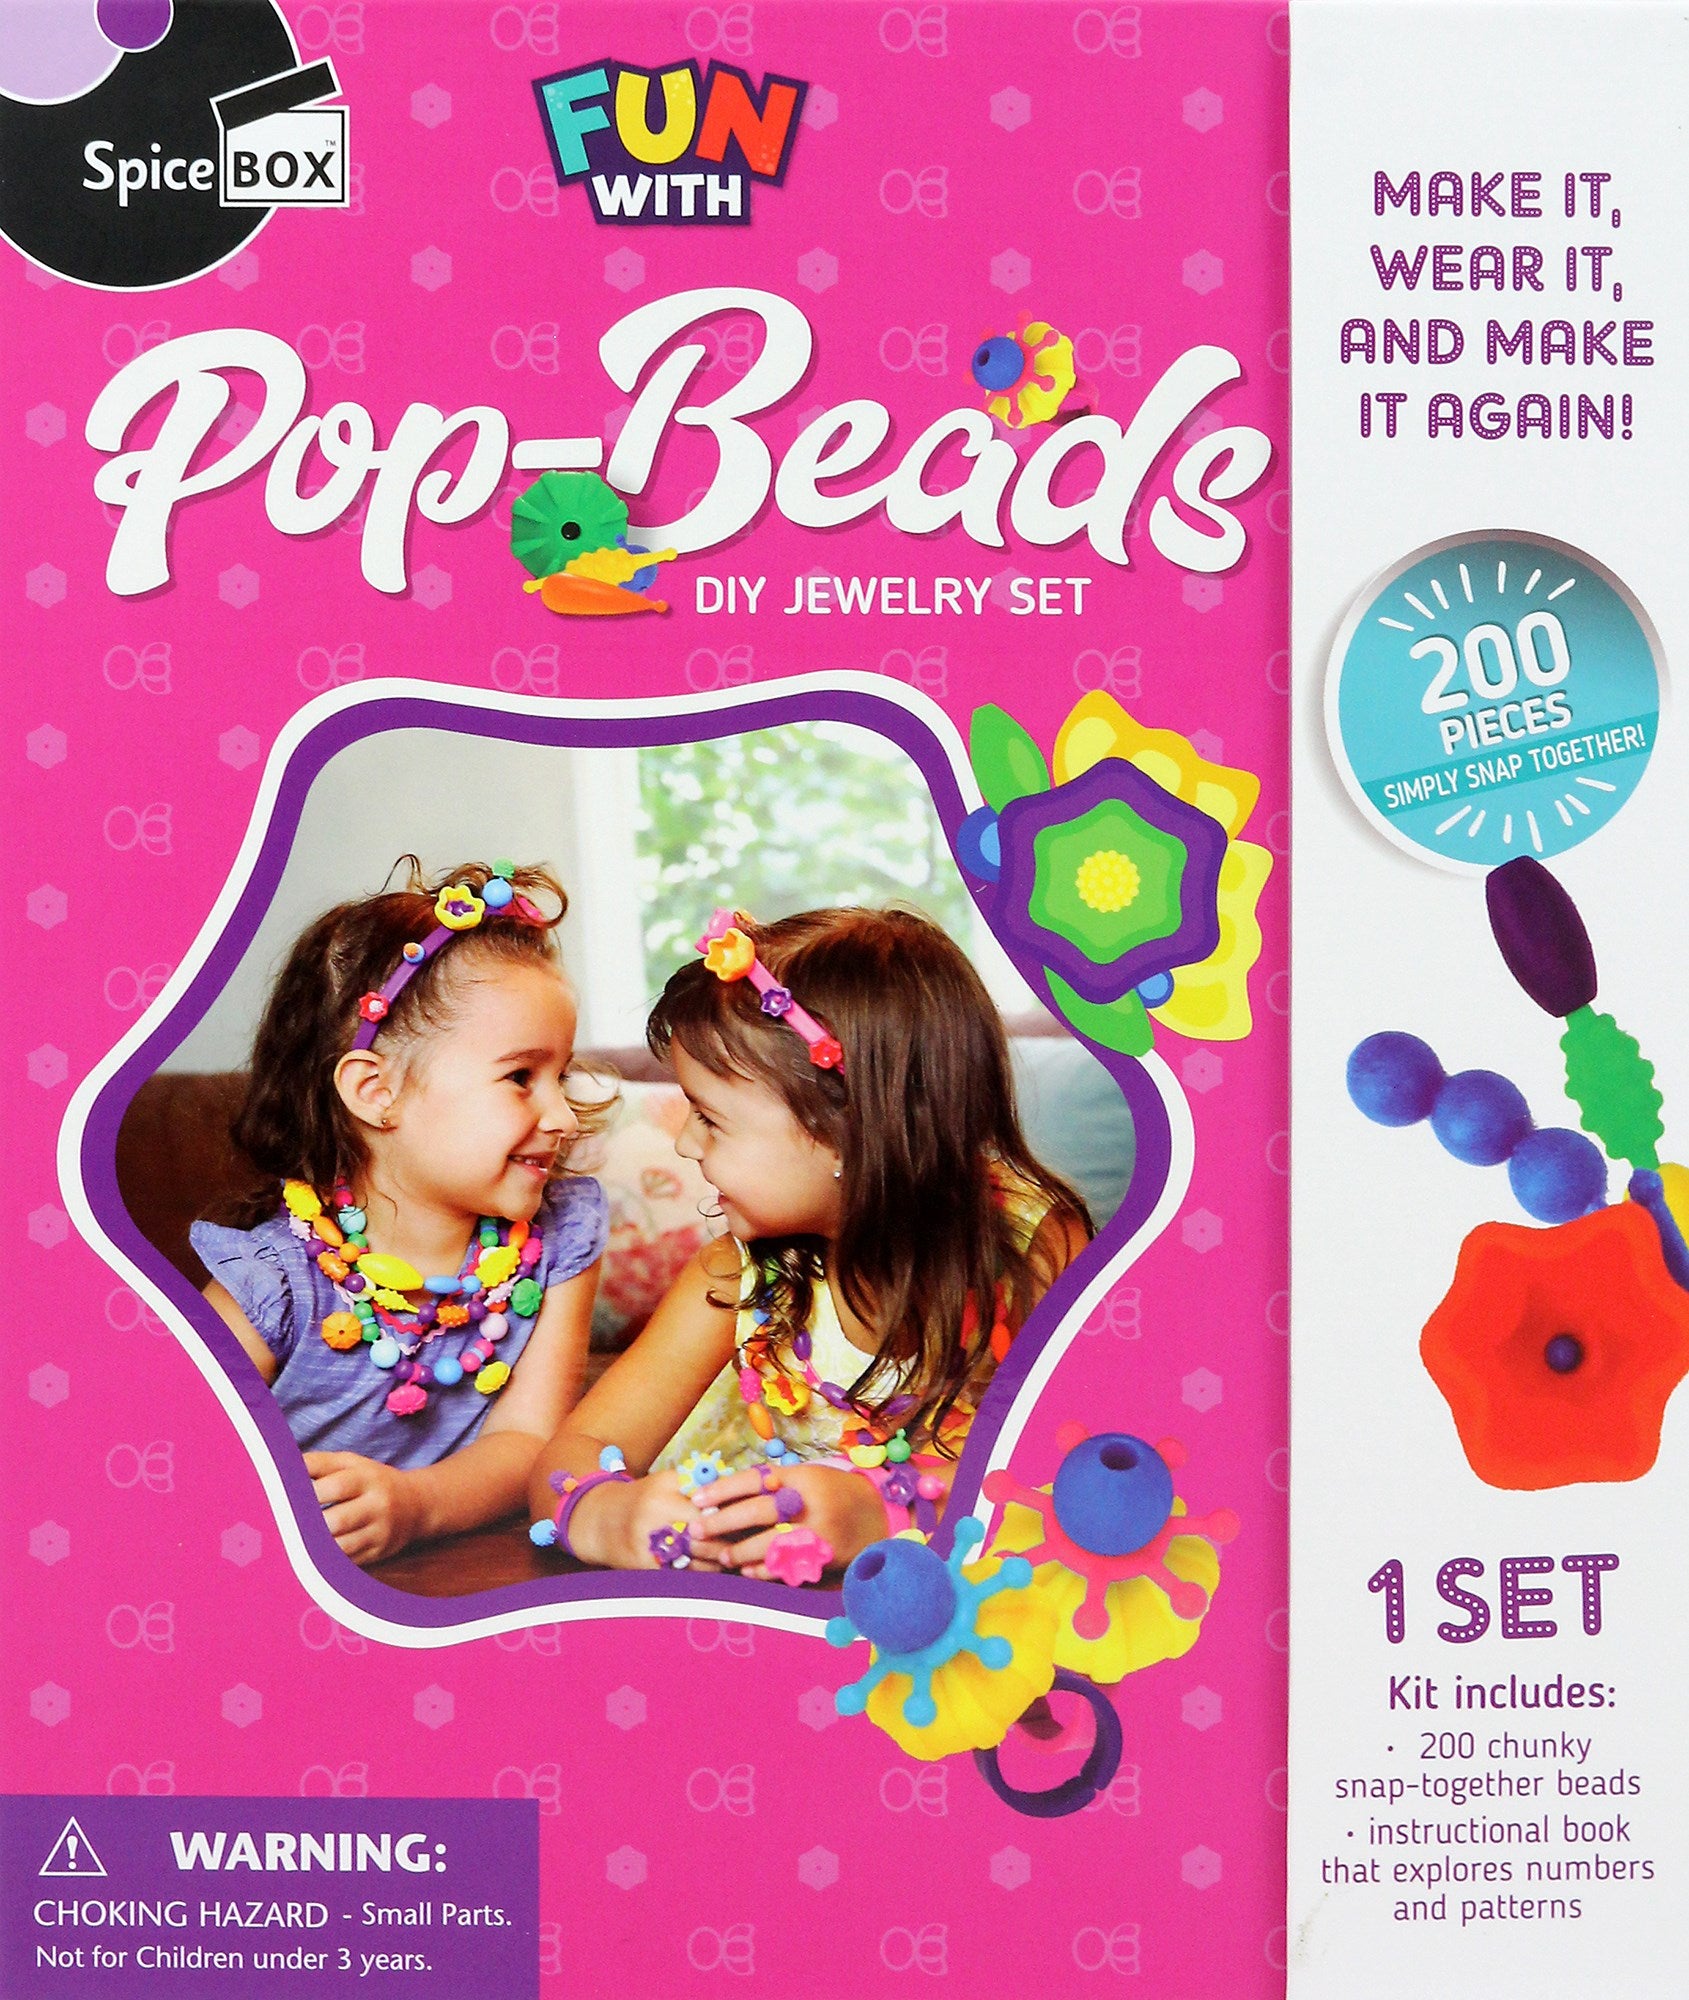 Spice Box Fun with Pop-Beads DIY Jewelry Set